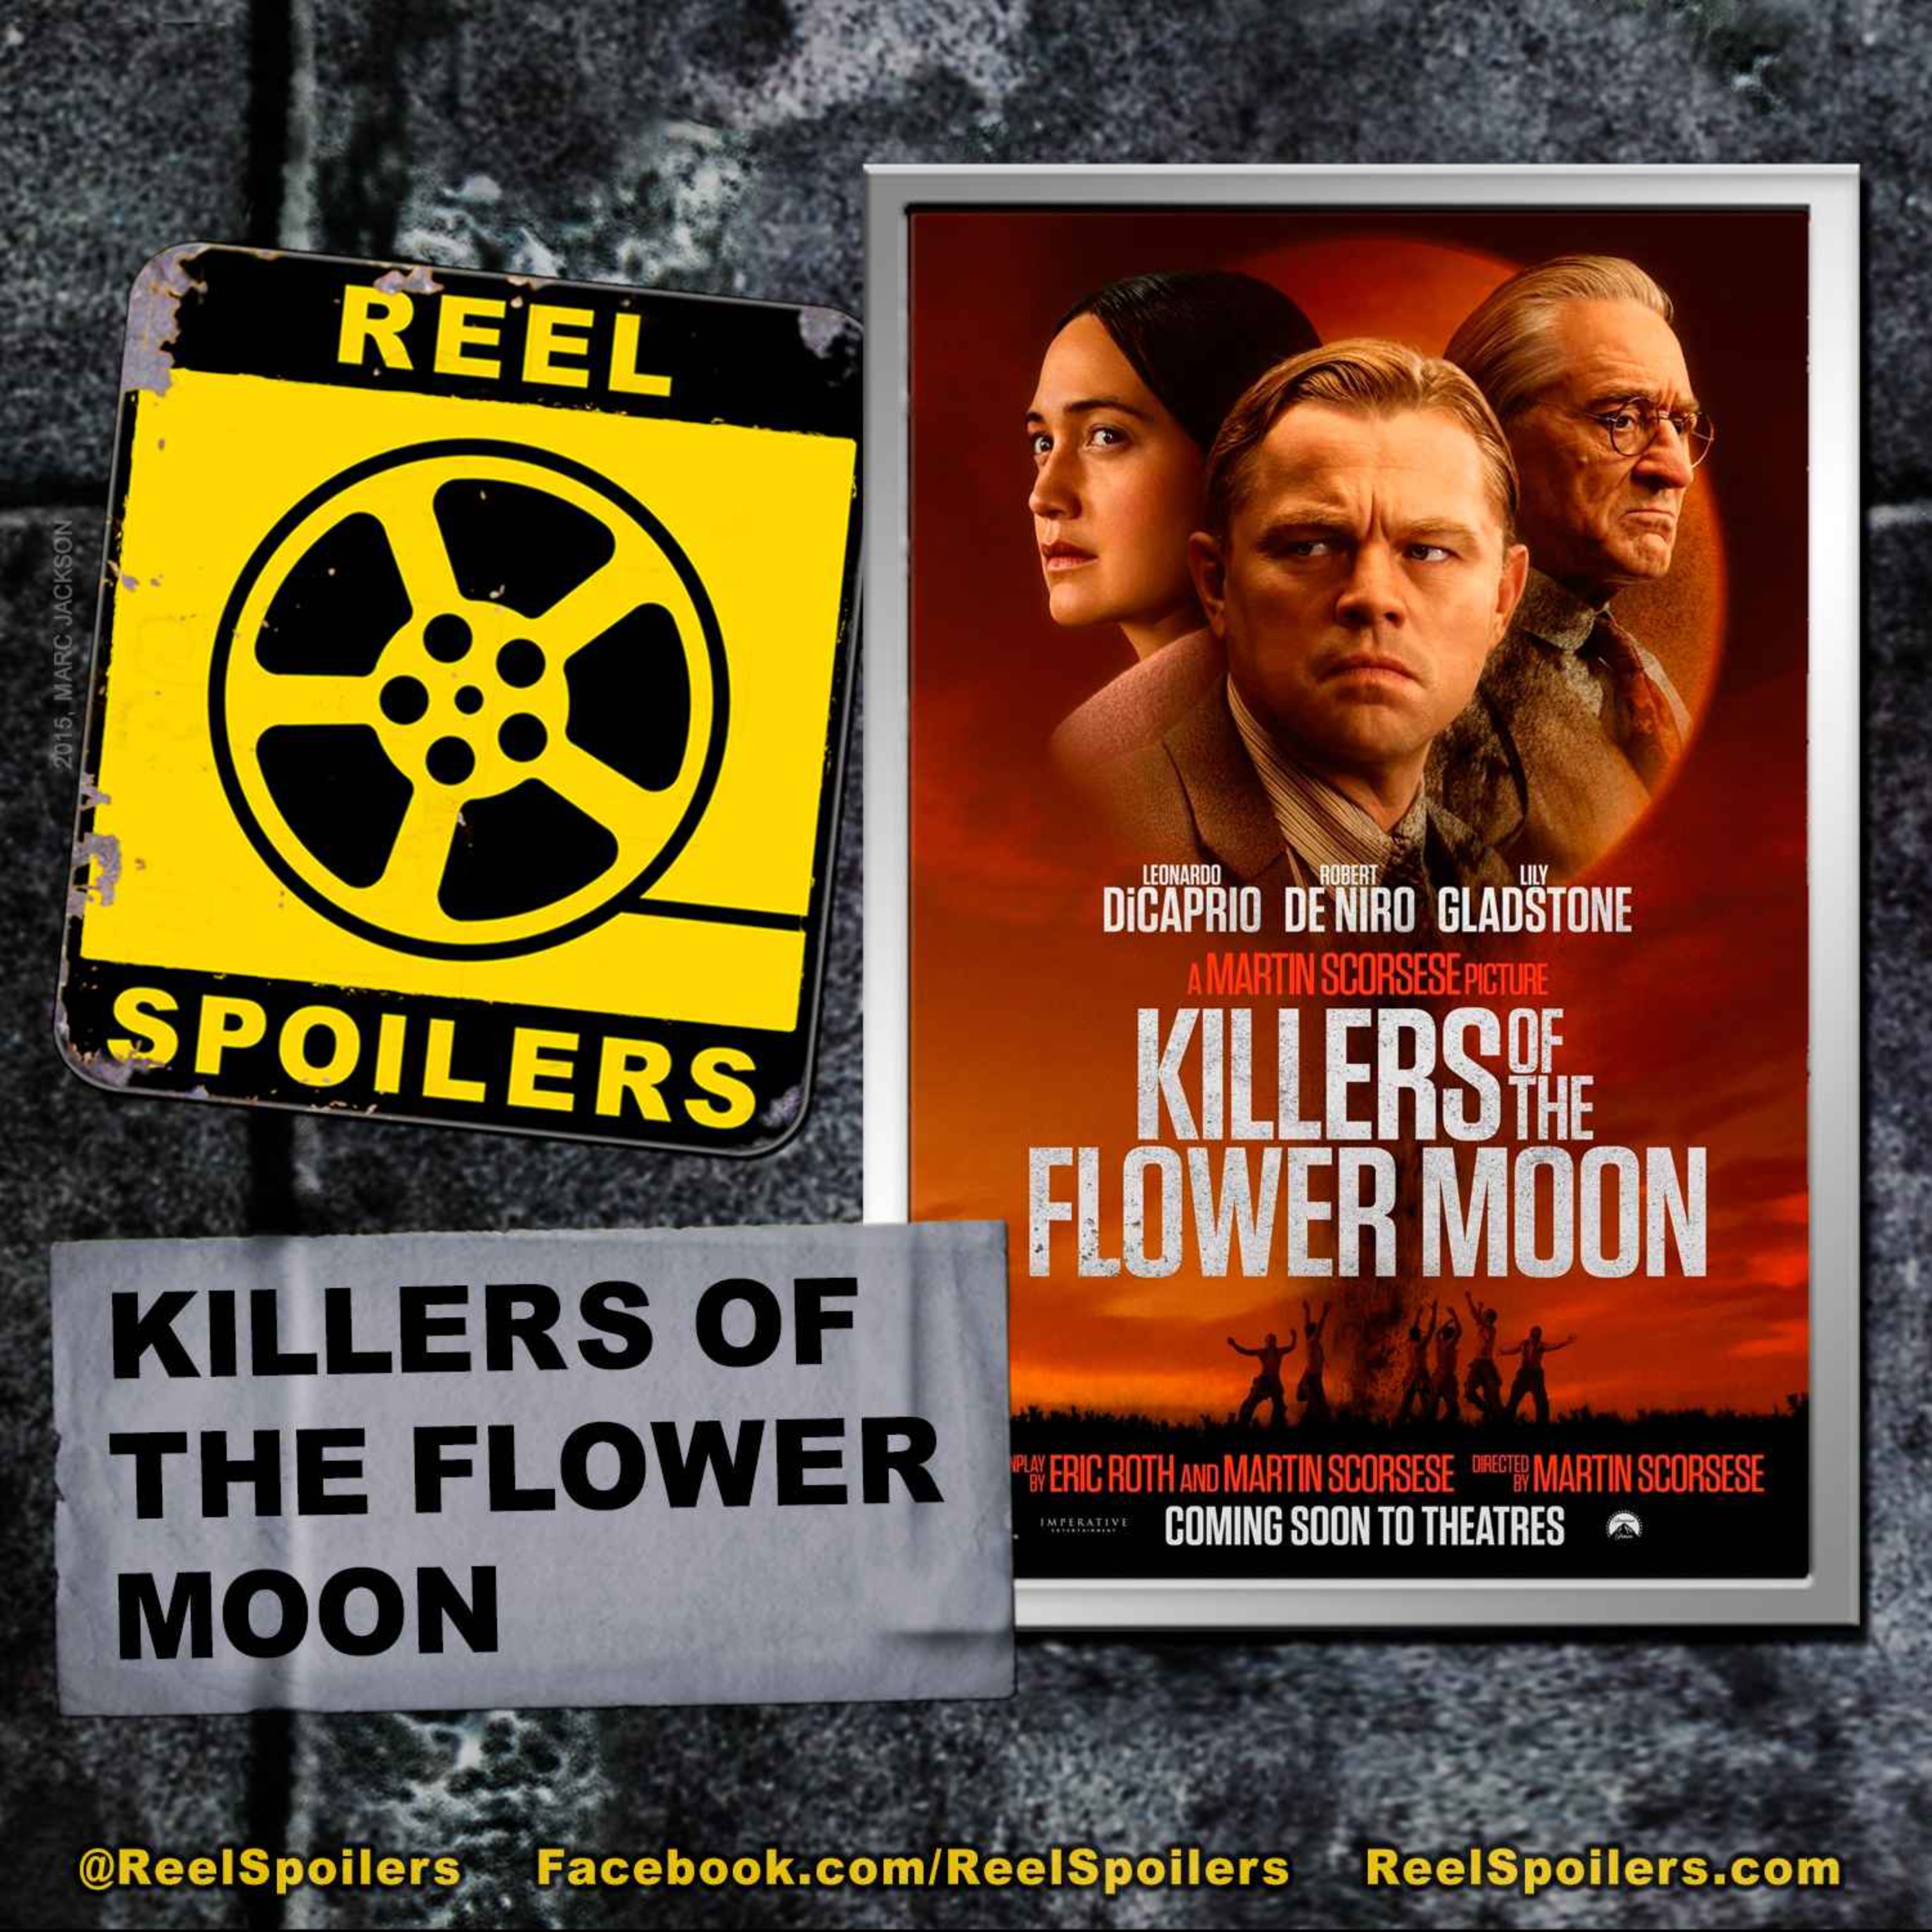 KILLERS OF THE FLOWER MOON Starring Leonardo DiCaprio, Lily Gladstone, Robert de Niro